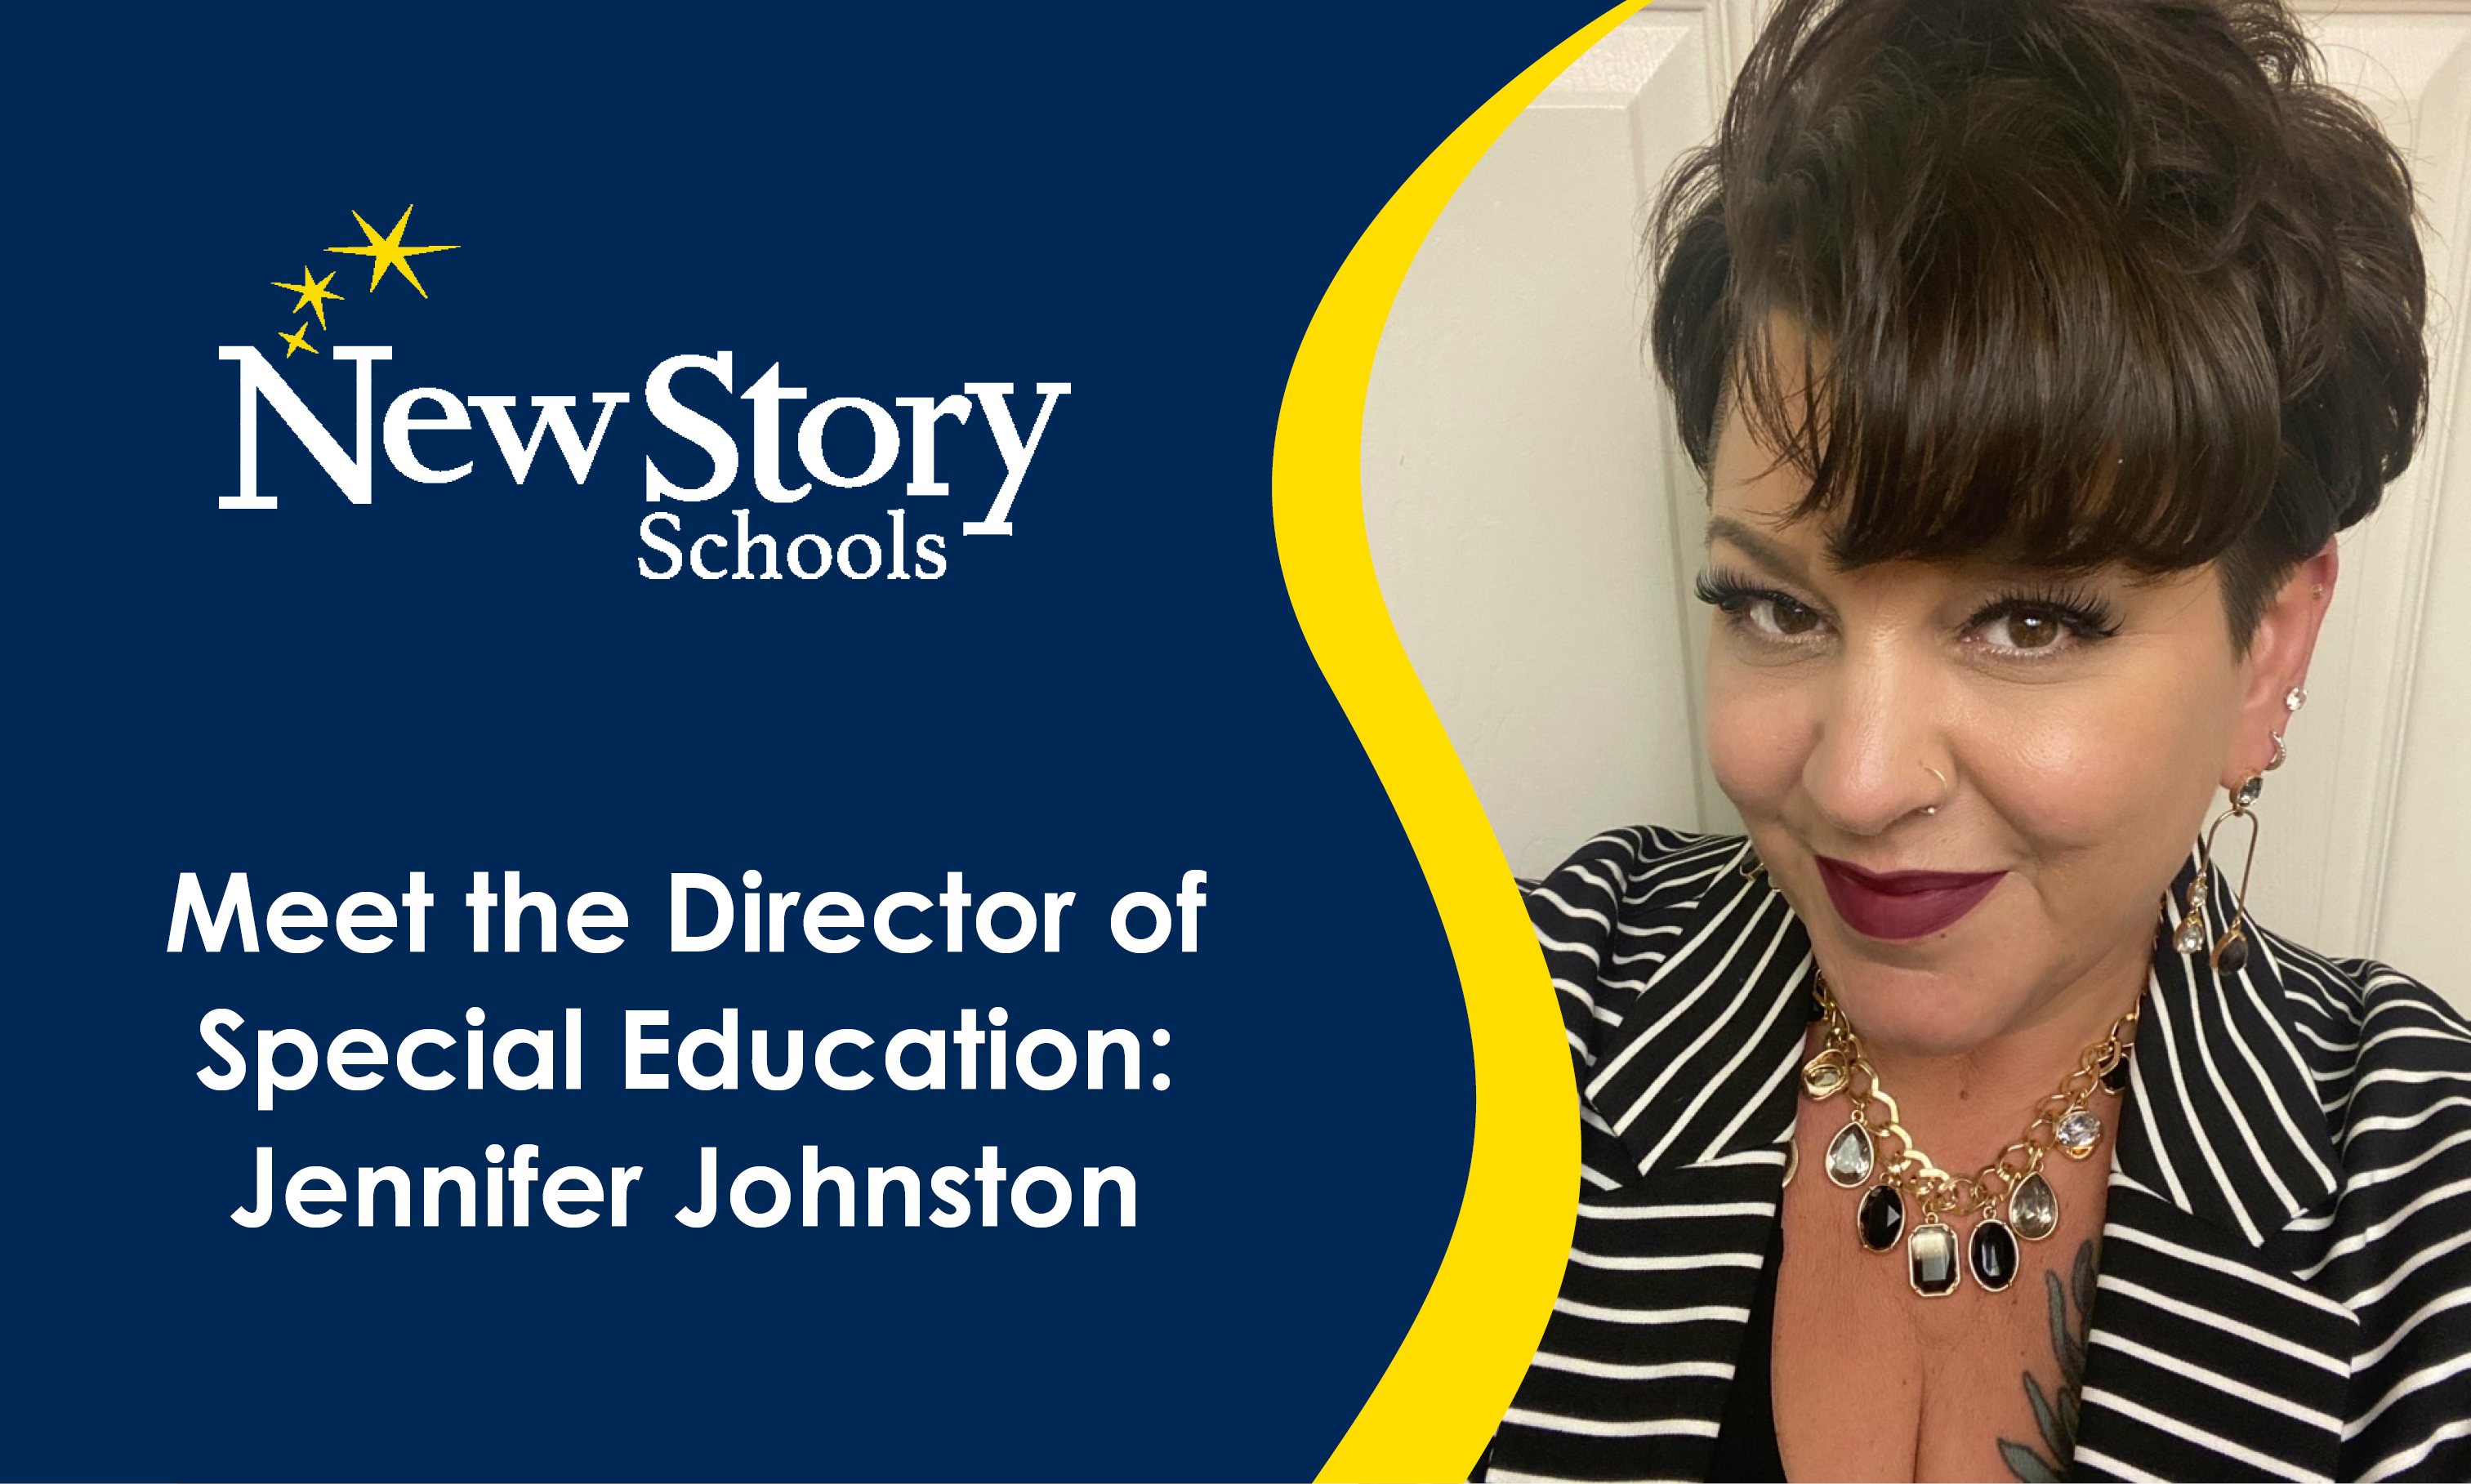 Meet the Director of Special Education: Jennifer Johnston